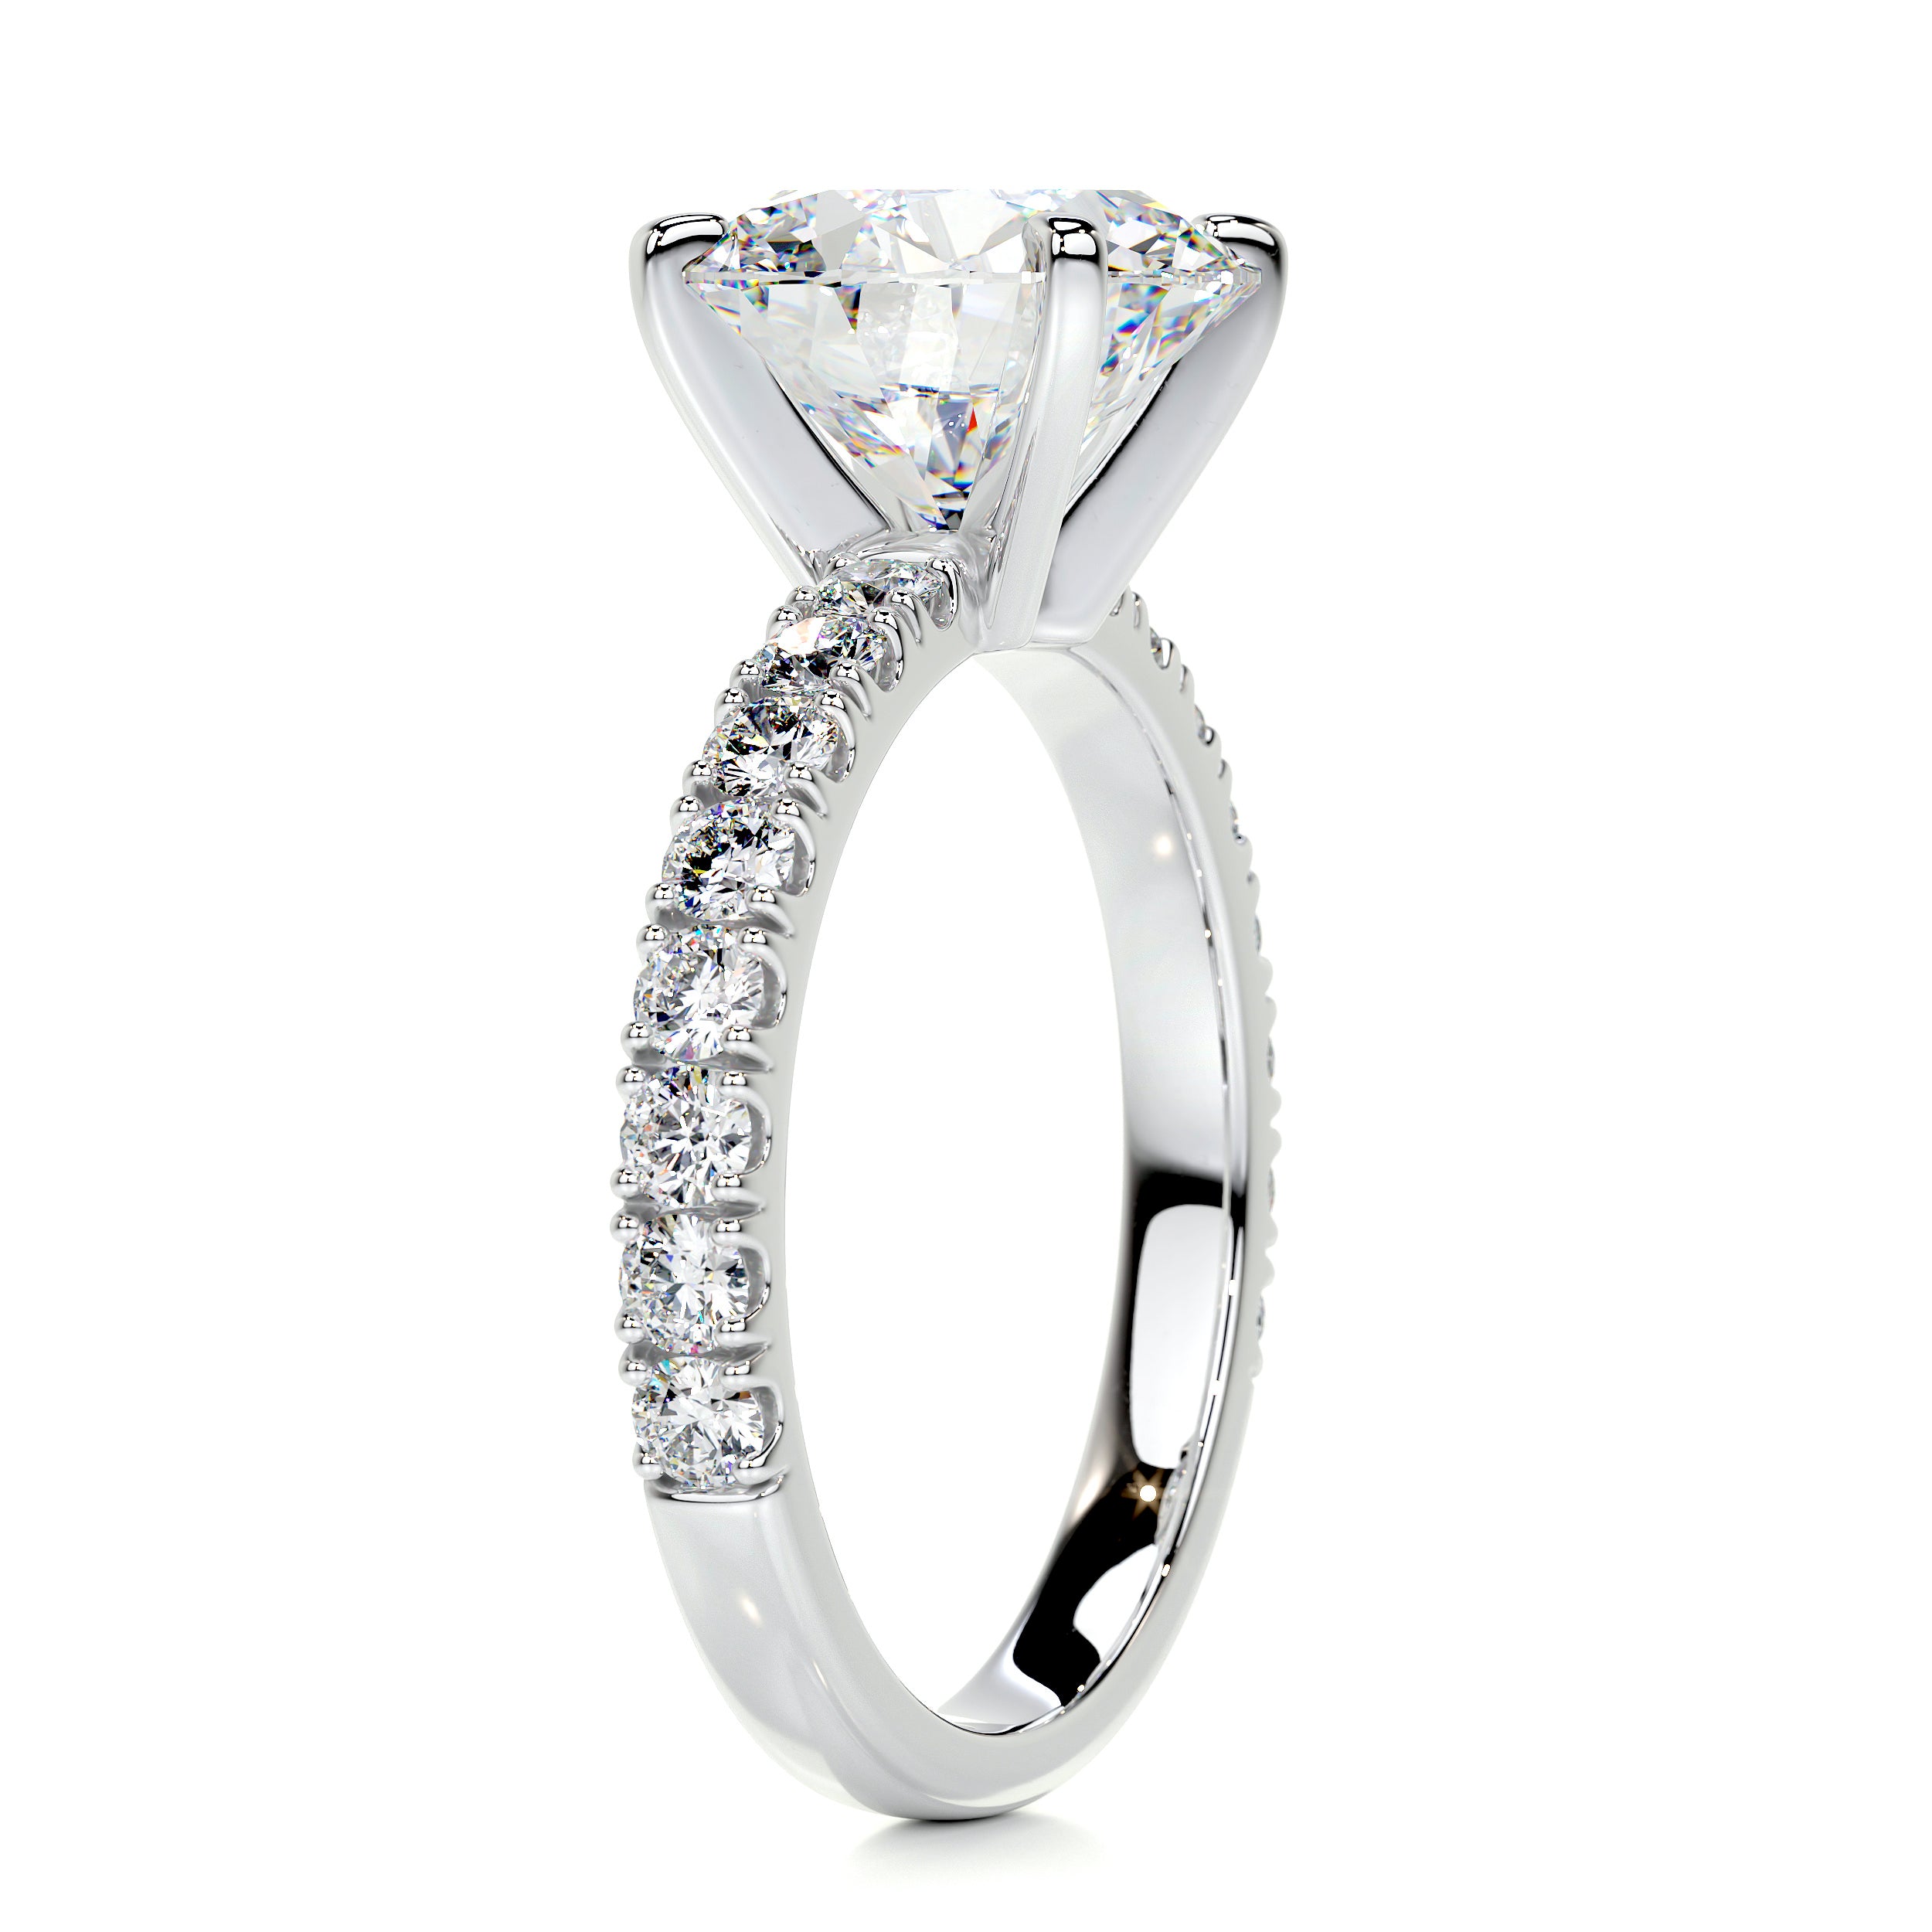 Alison Moissanite & Diamonds Ring   (3.62 Carat) -18K White Gold